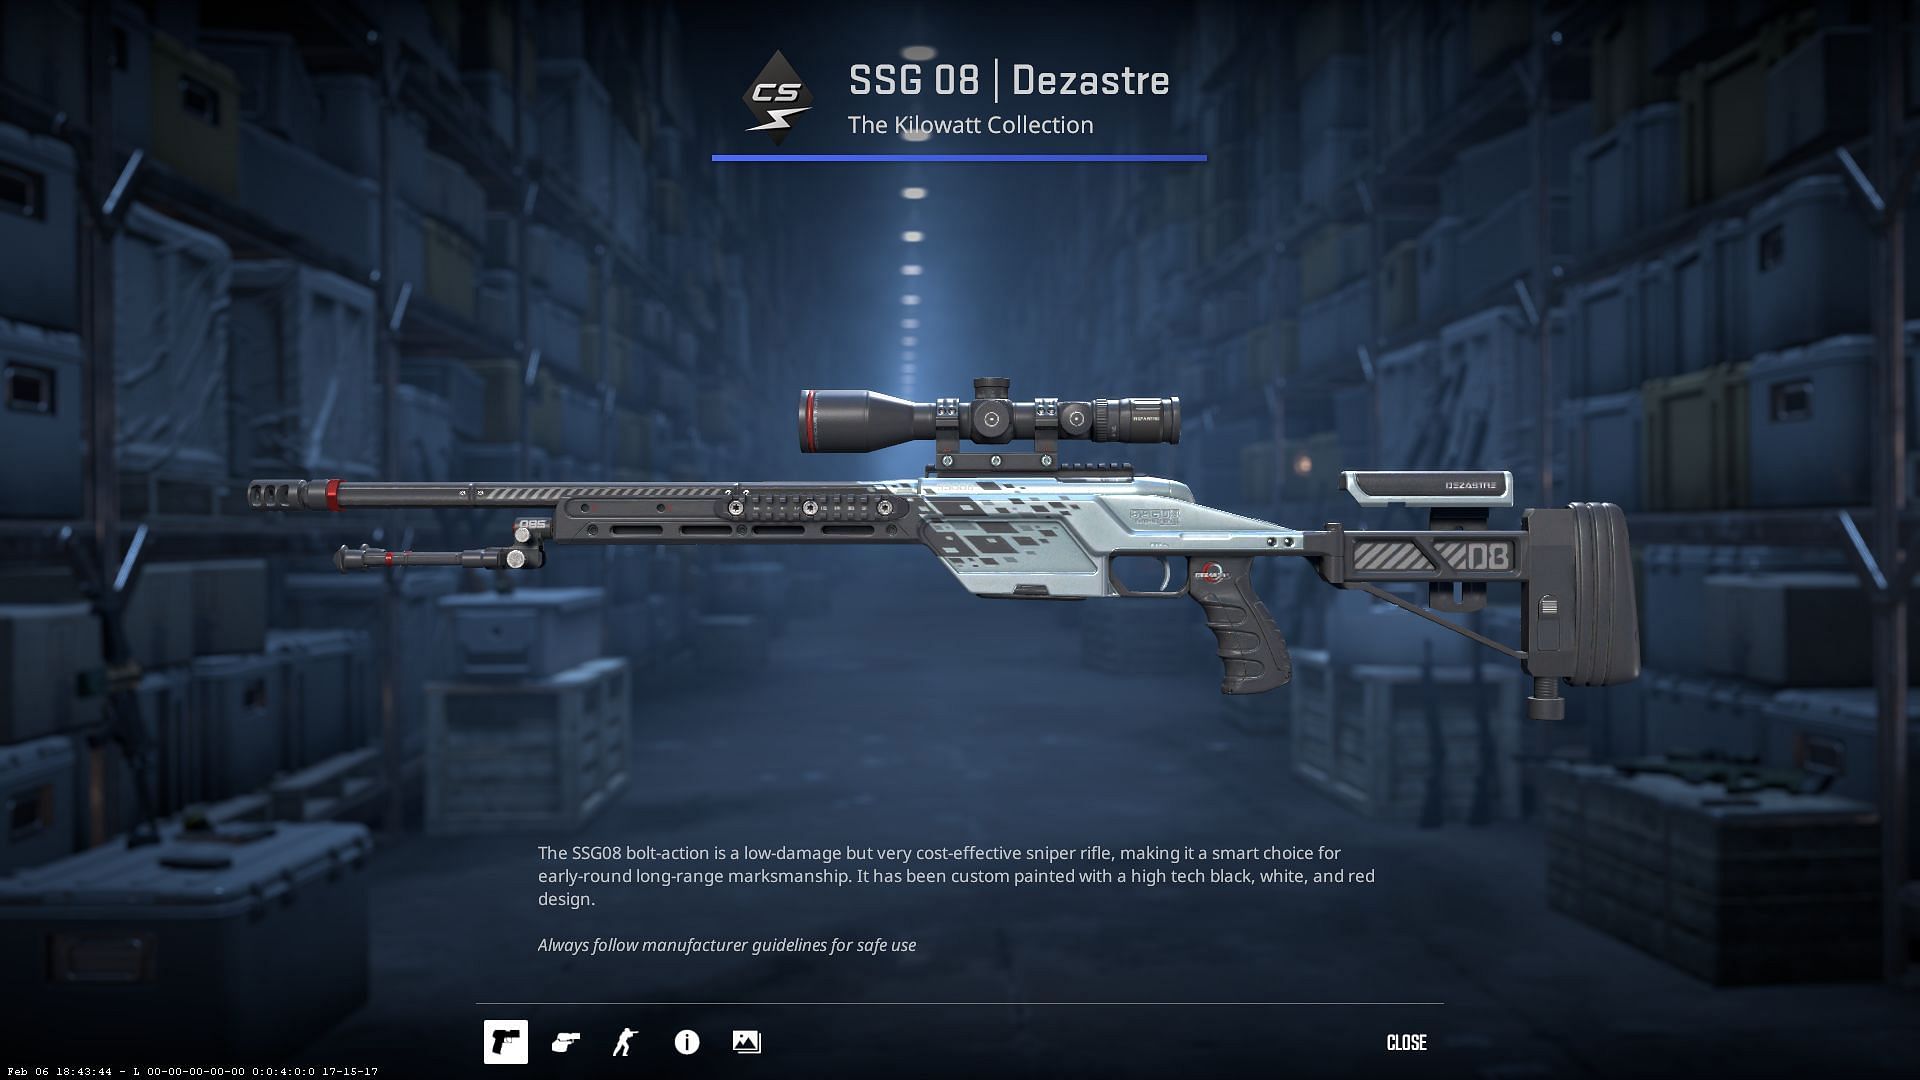 SSG 08 Dezastre (Image via Valve)